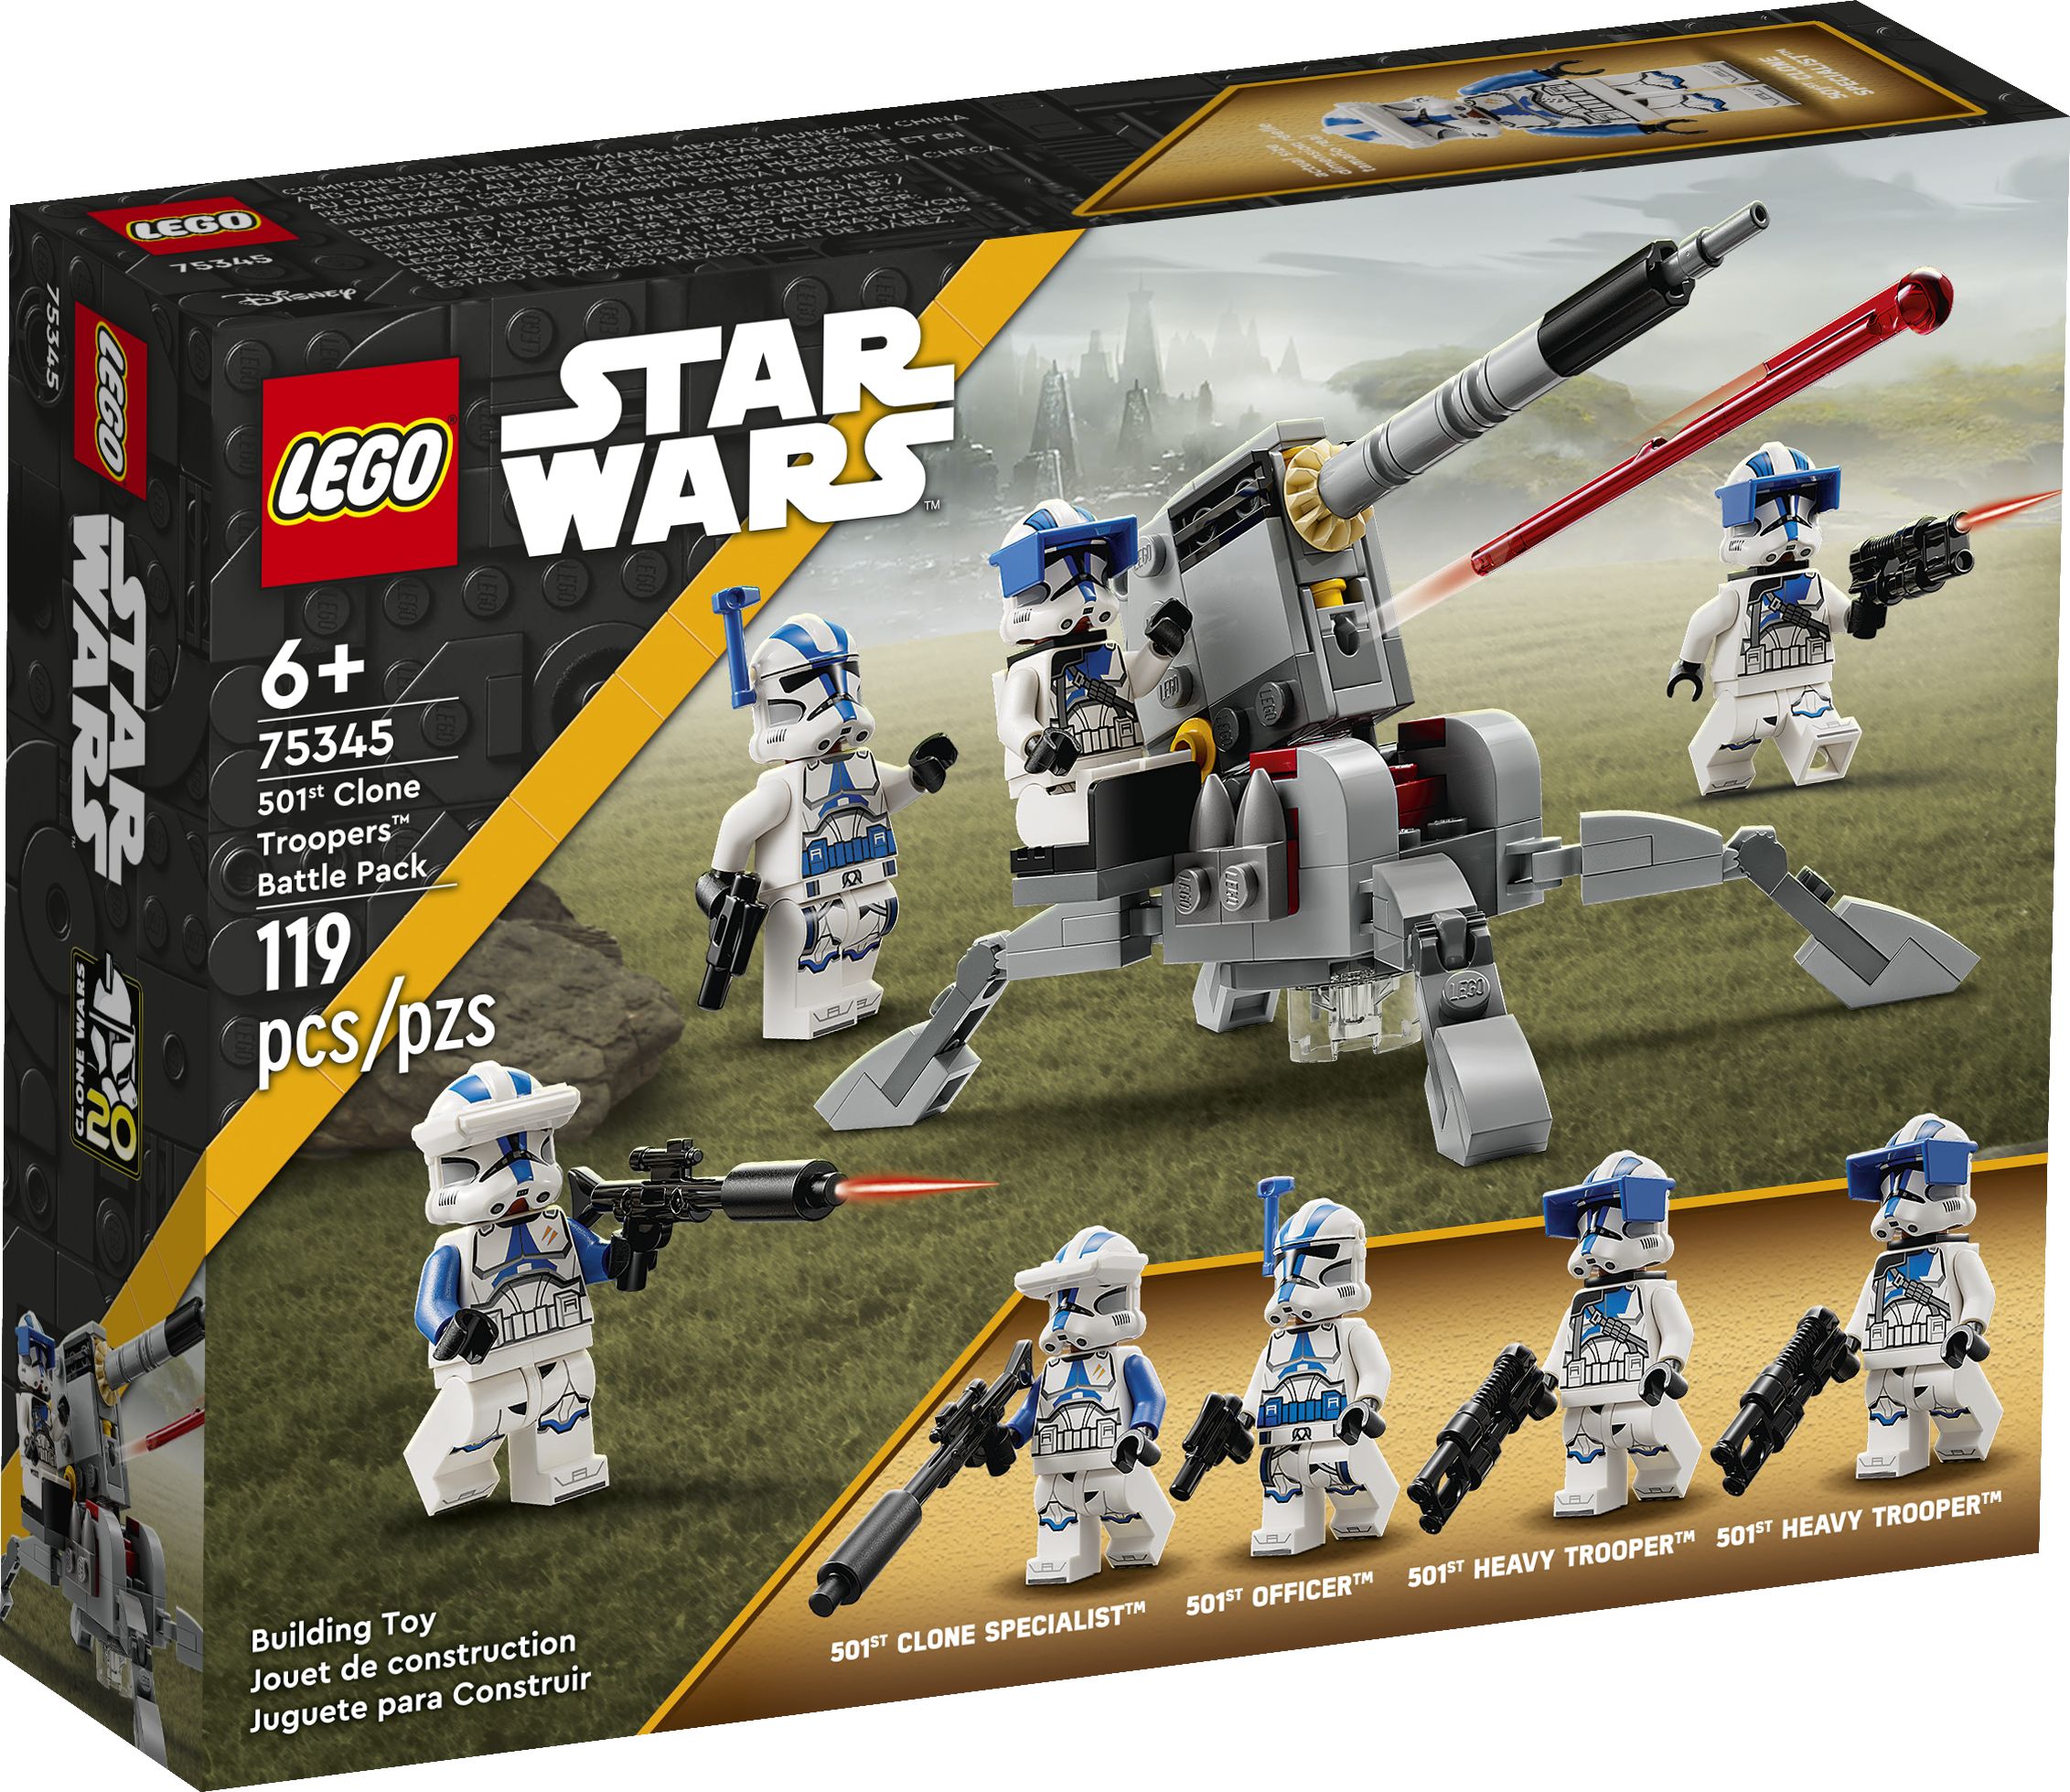 LEGO Star Wars 75345 501st Clone Troopers™ Battle Pack LEGO_75345_Box1_v39.jpg